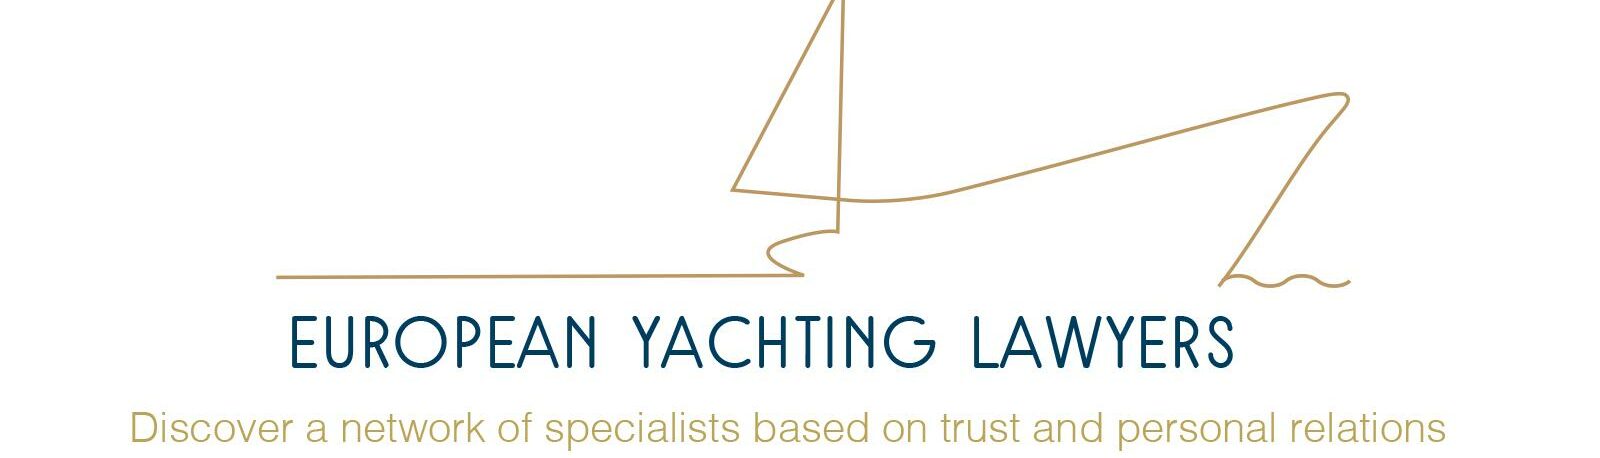 European Yachting Lawyers